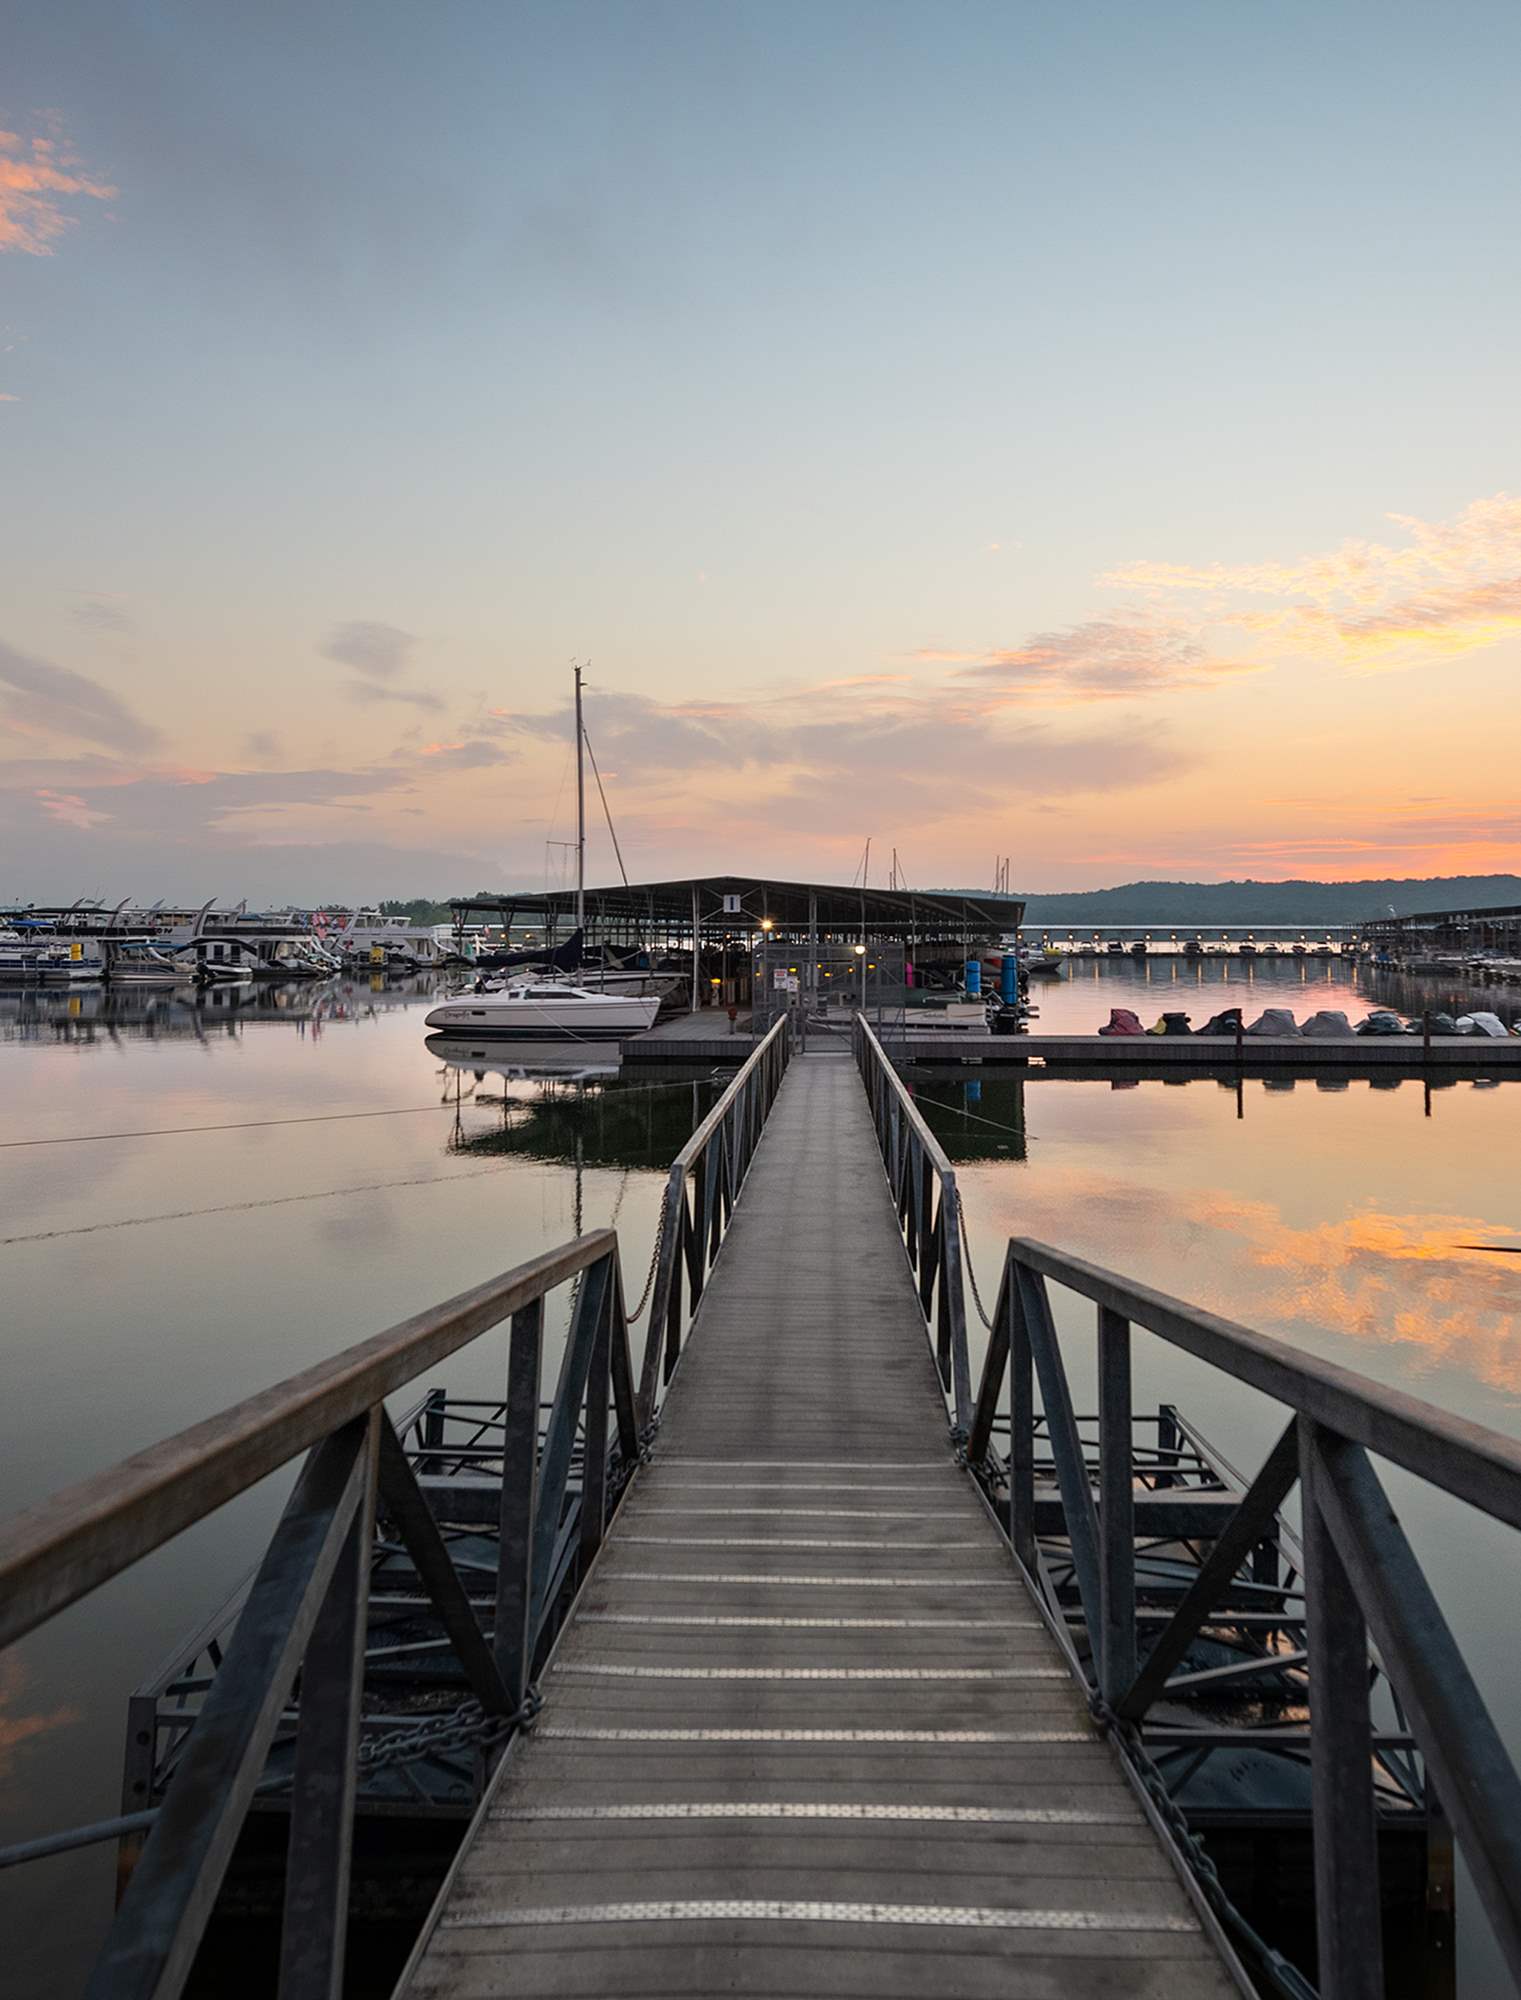 Marina boardwalk to dock sunset